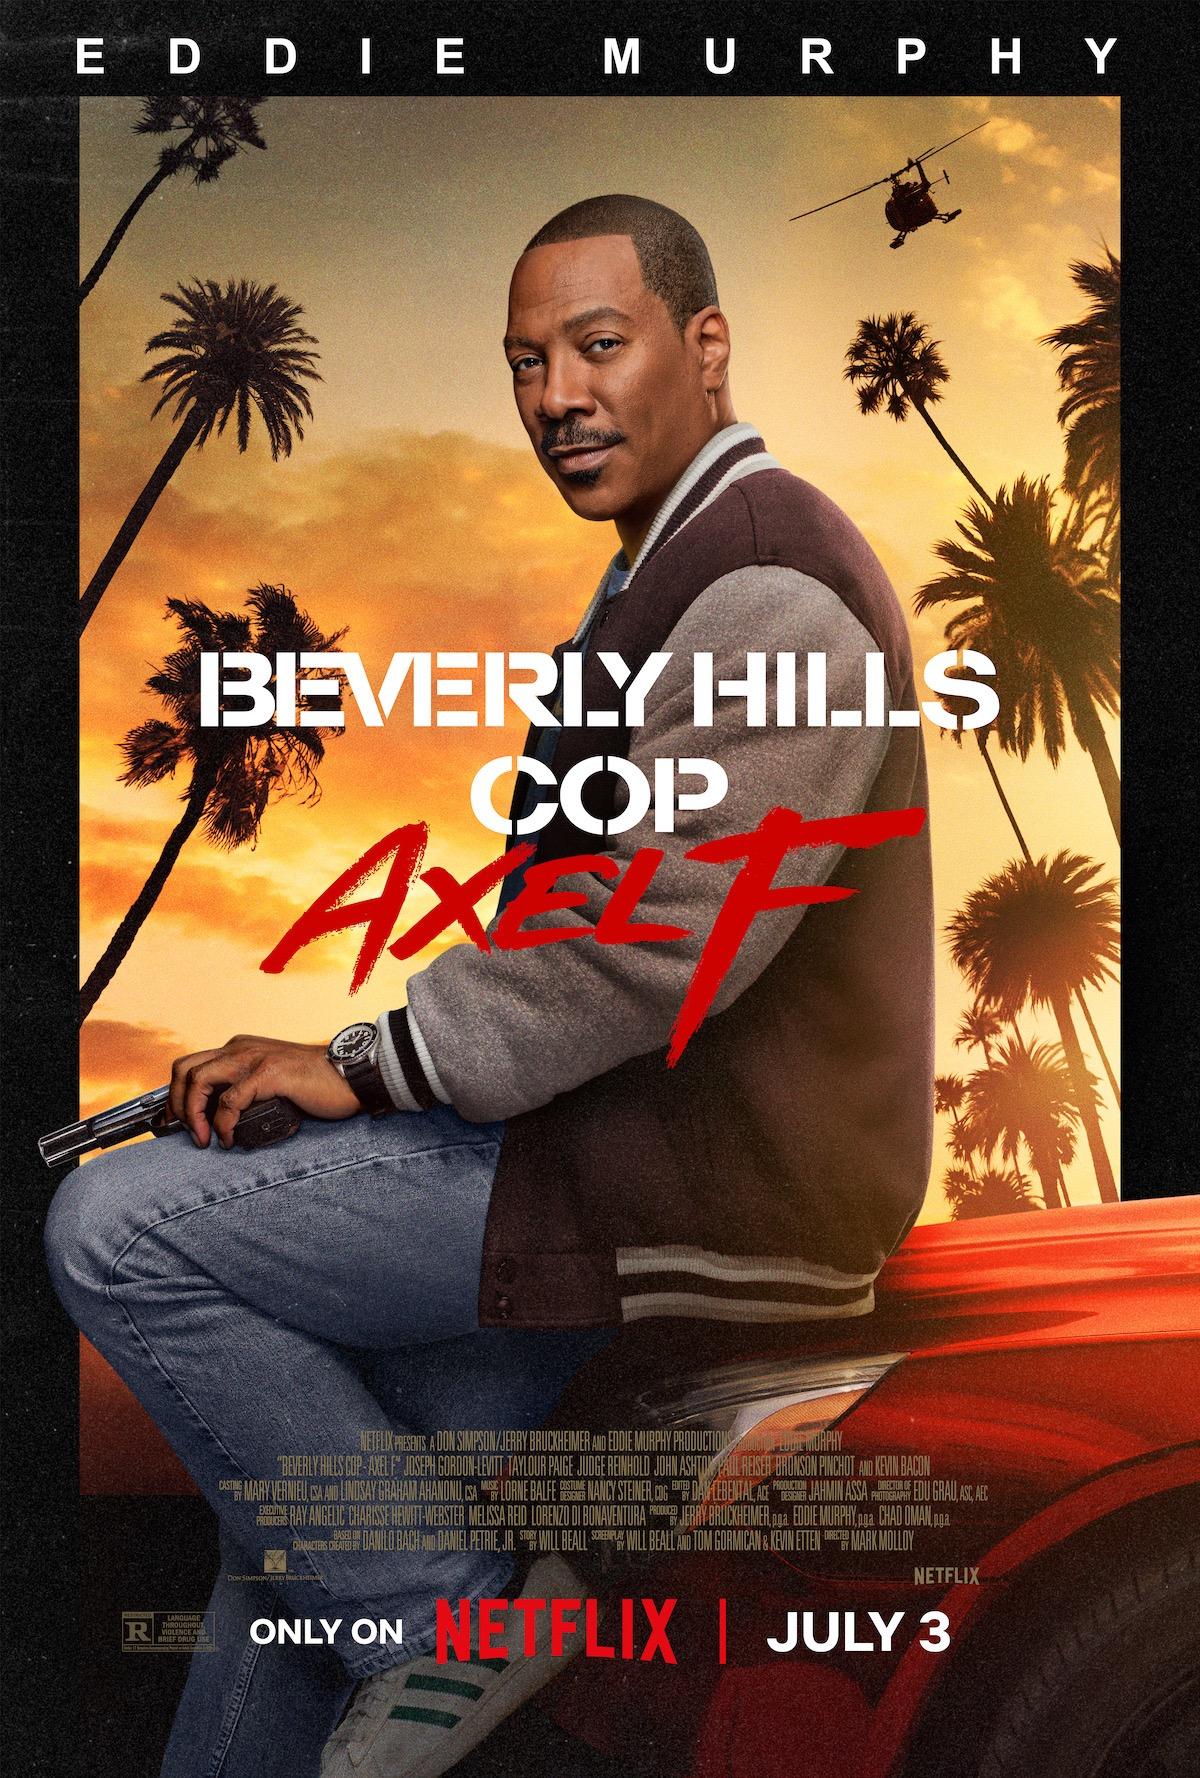 beverly-hills-cop-axel-f-poster.jpg